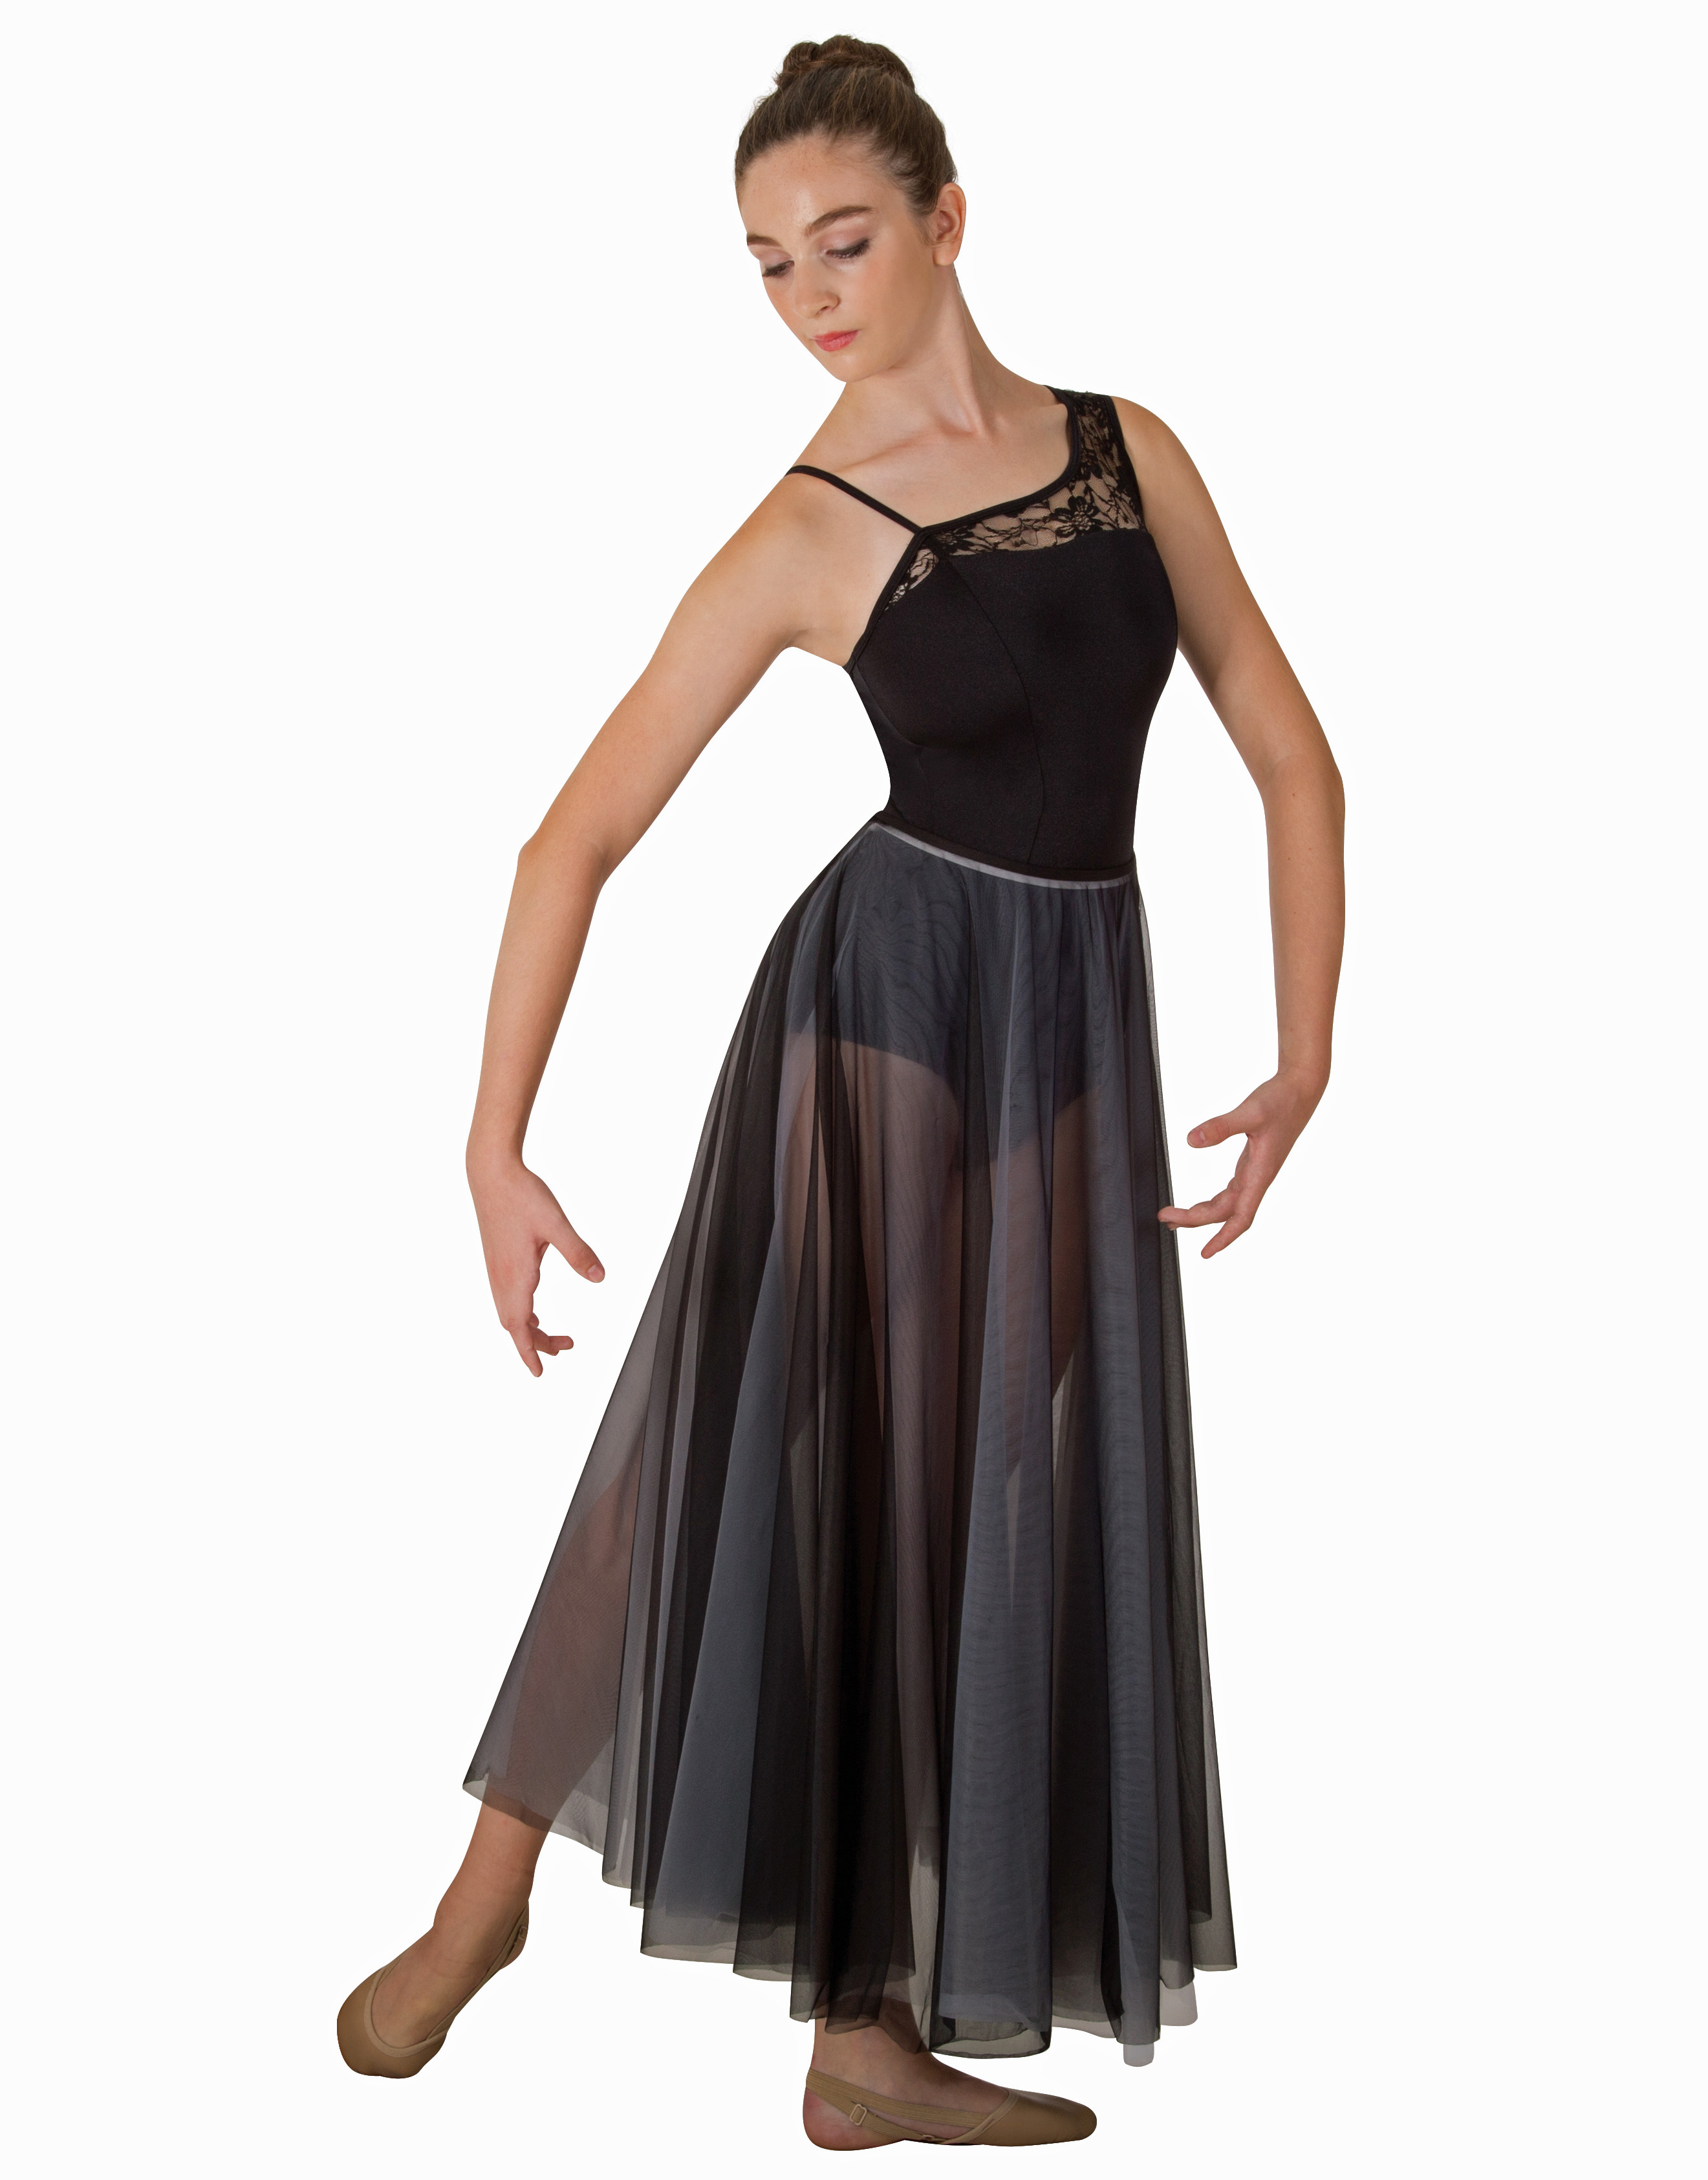 Body Wrappers Full Length Chiffon Skirt - Baum's Dancewear